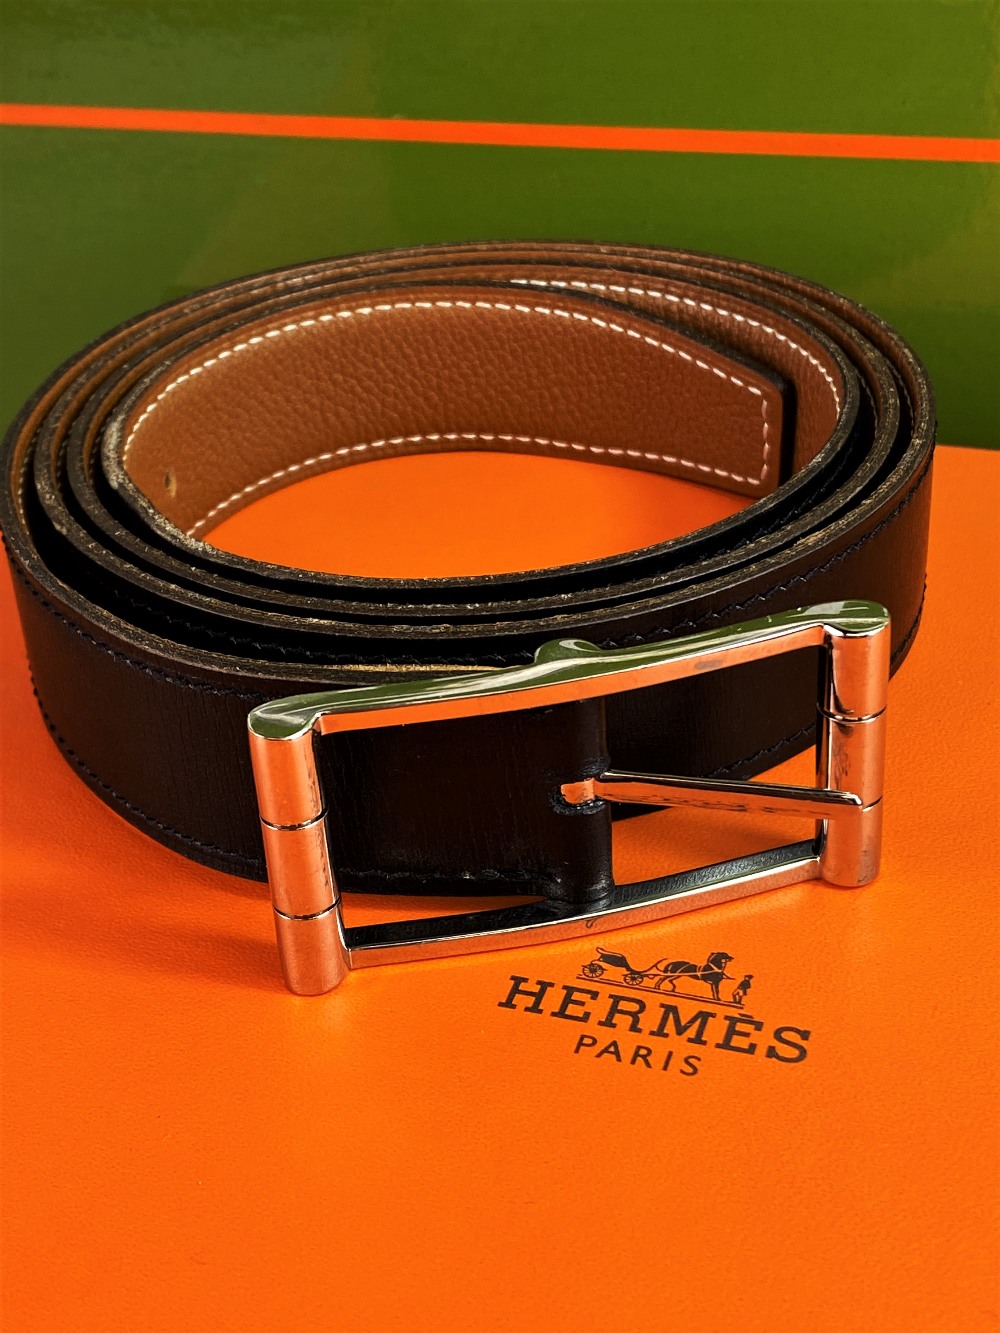 Hermes Paris Gent`s 105 Reversible Black Belt - Image 5 of 5